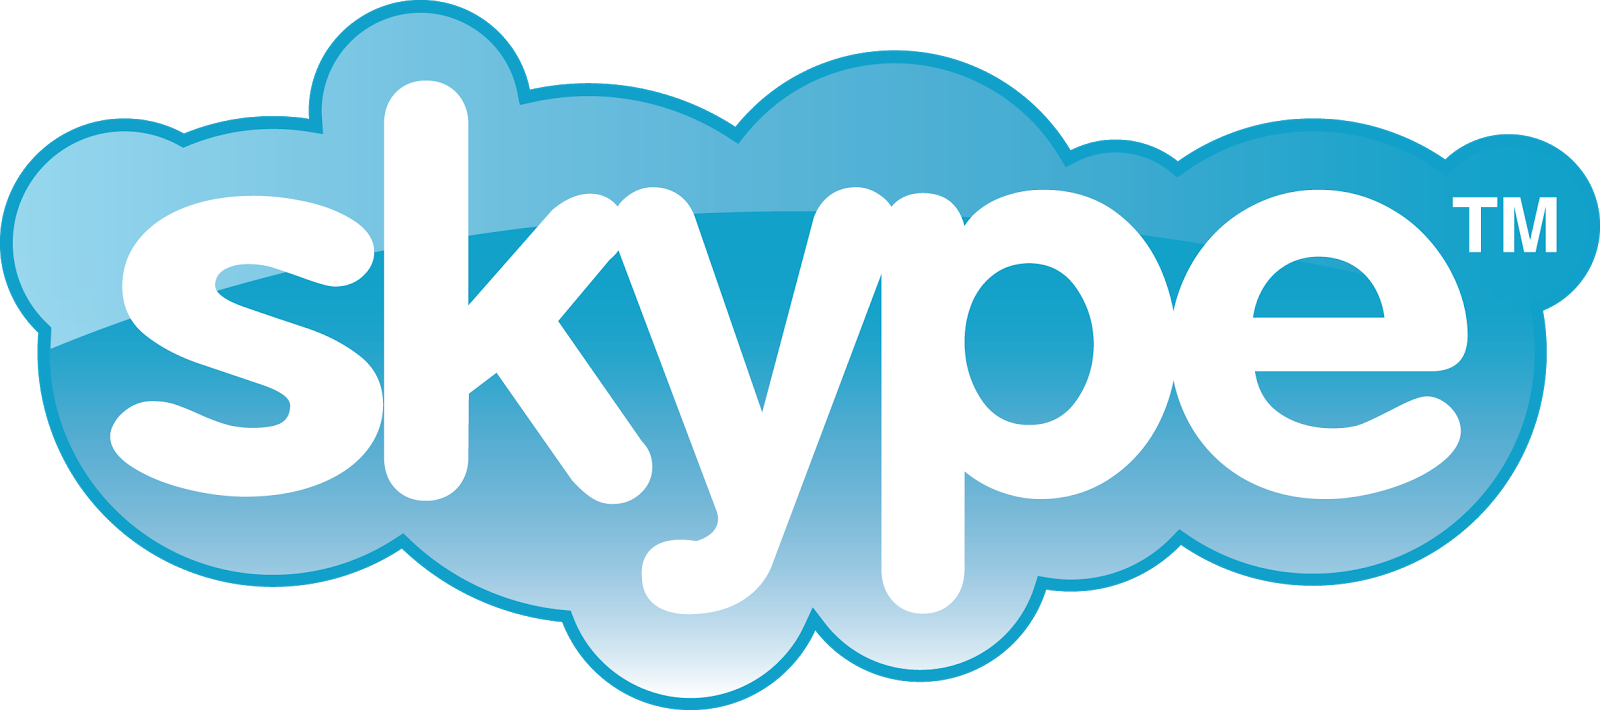 https://login.skype.com/login?return_url=https%3A%2F%2Fsecure.skype.com%2Faccount%2Fmain-page&message=logged_out&lc=1033